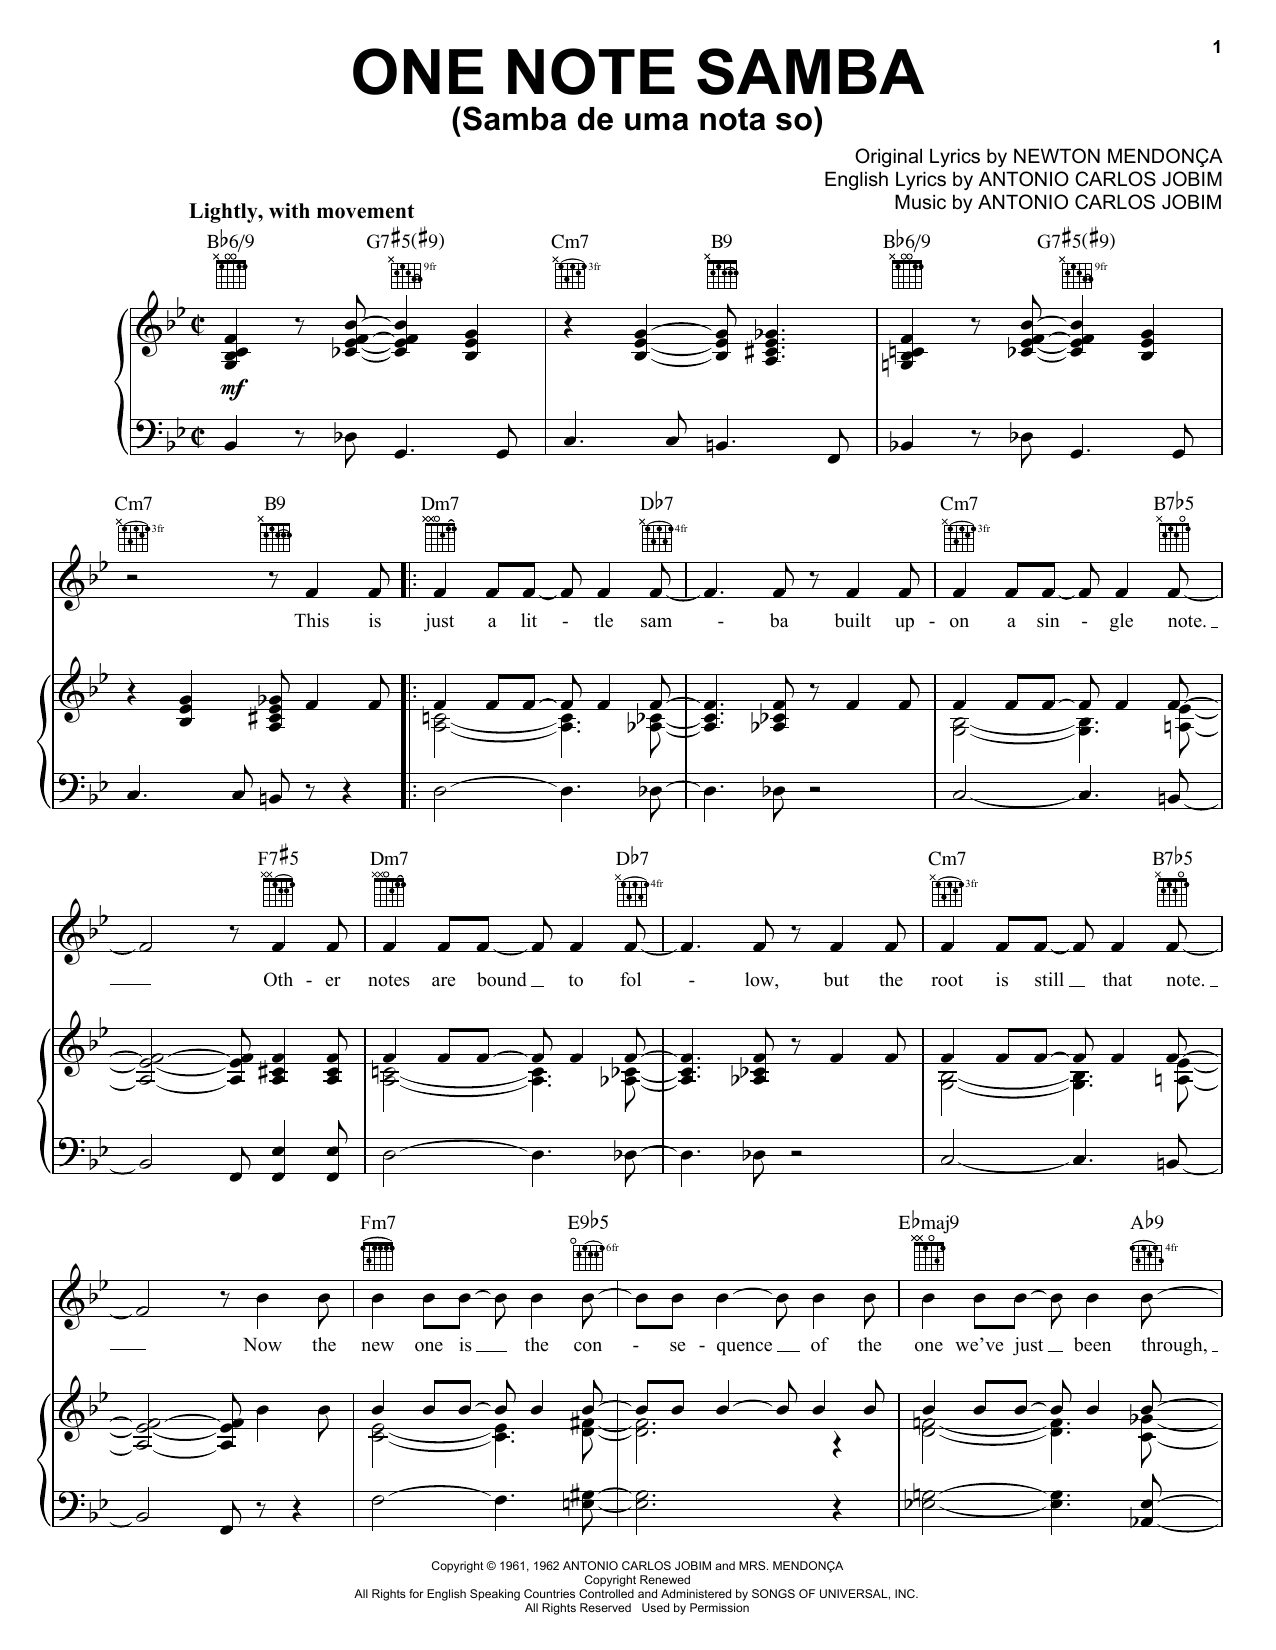 Download Antonio Carlos Jobim One Note Samba (Samba De Uma Nota So) Sheet Music and learn how to play Voice PDF digital score in minutes